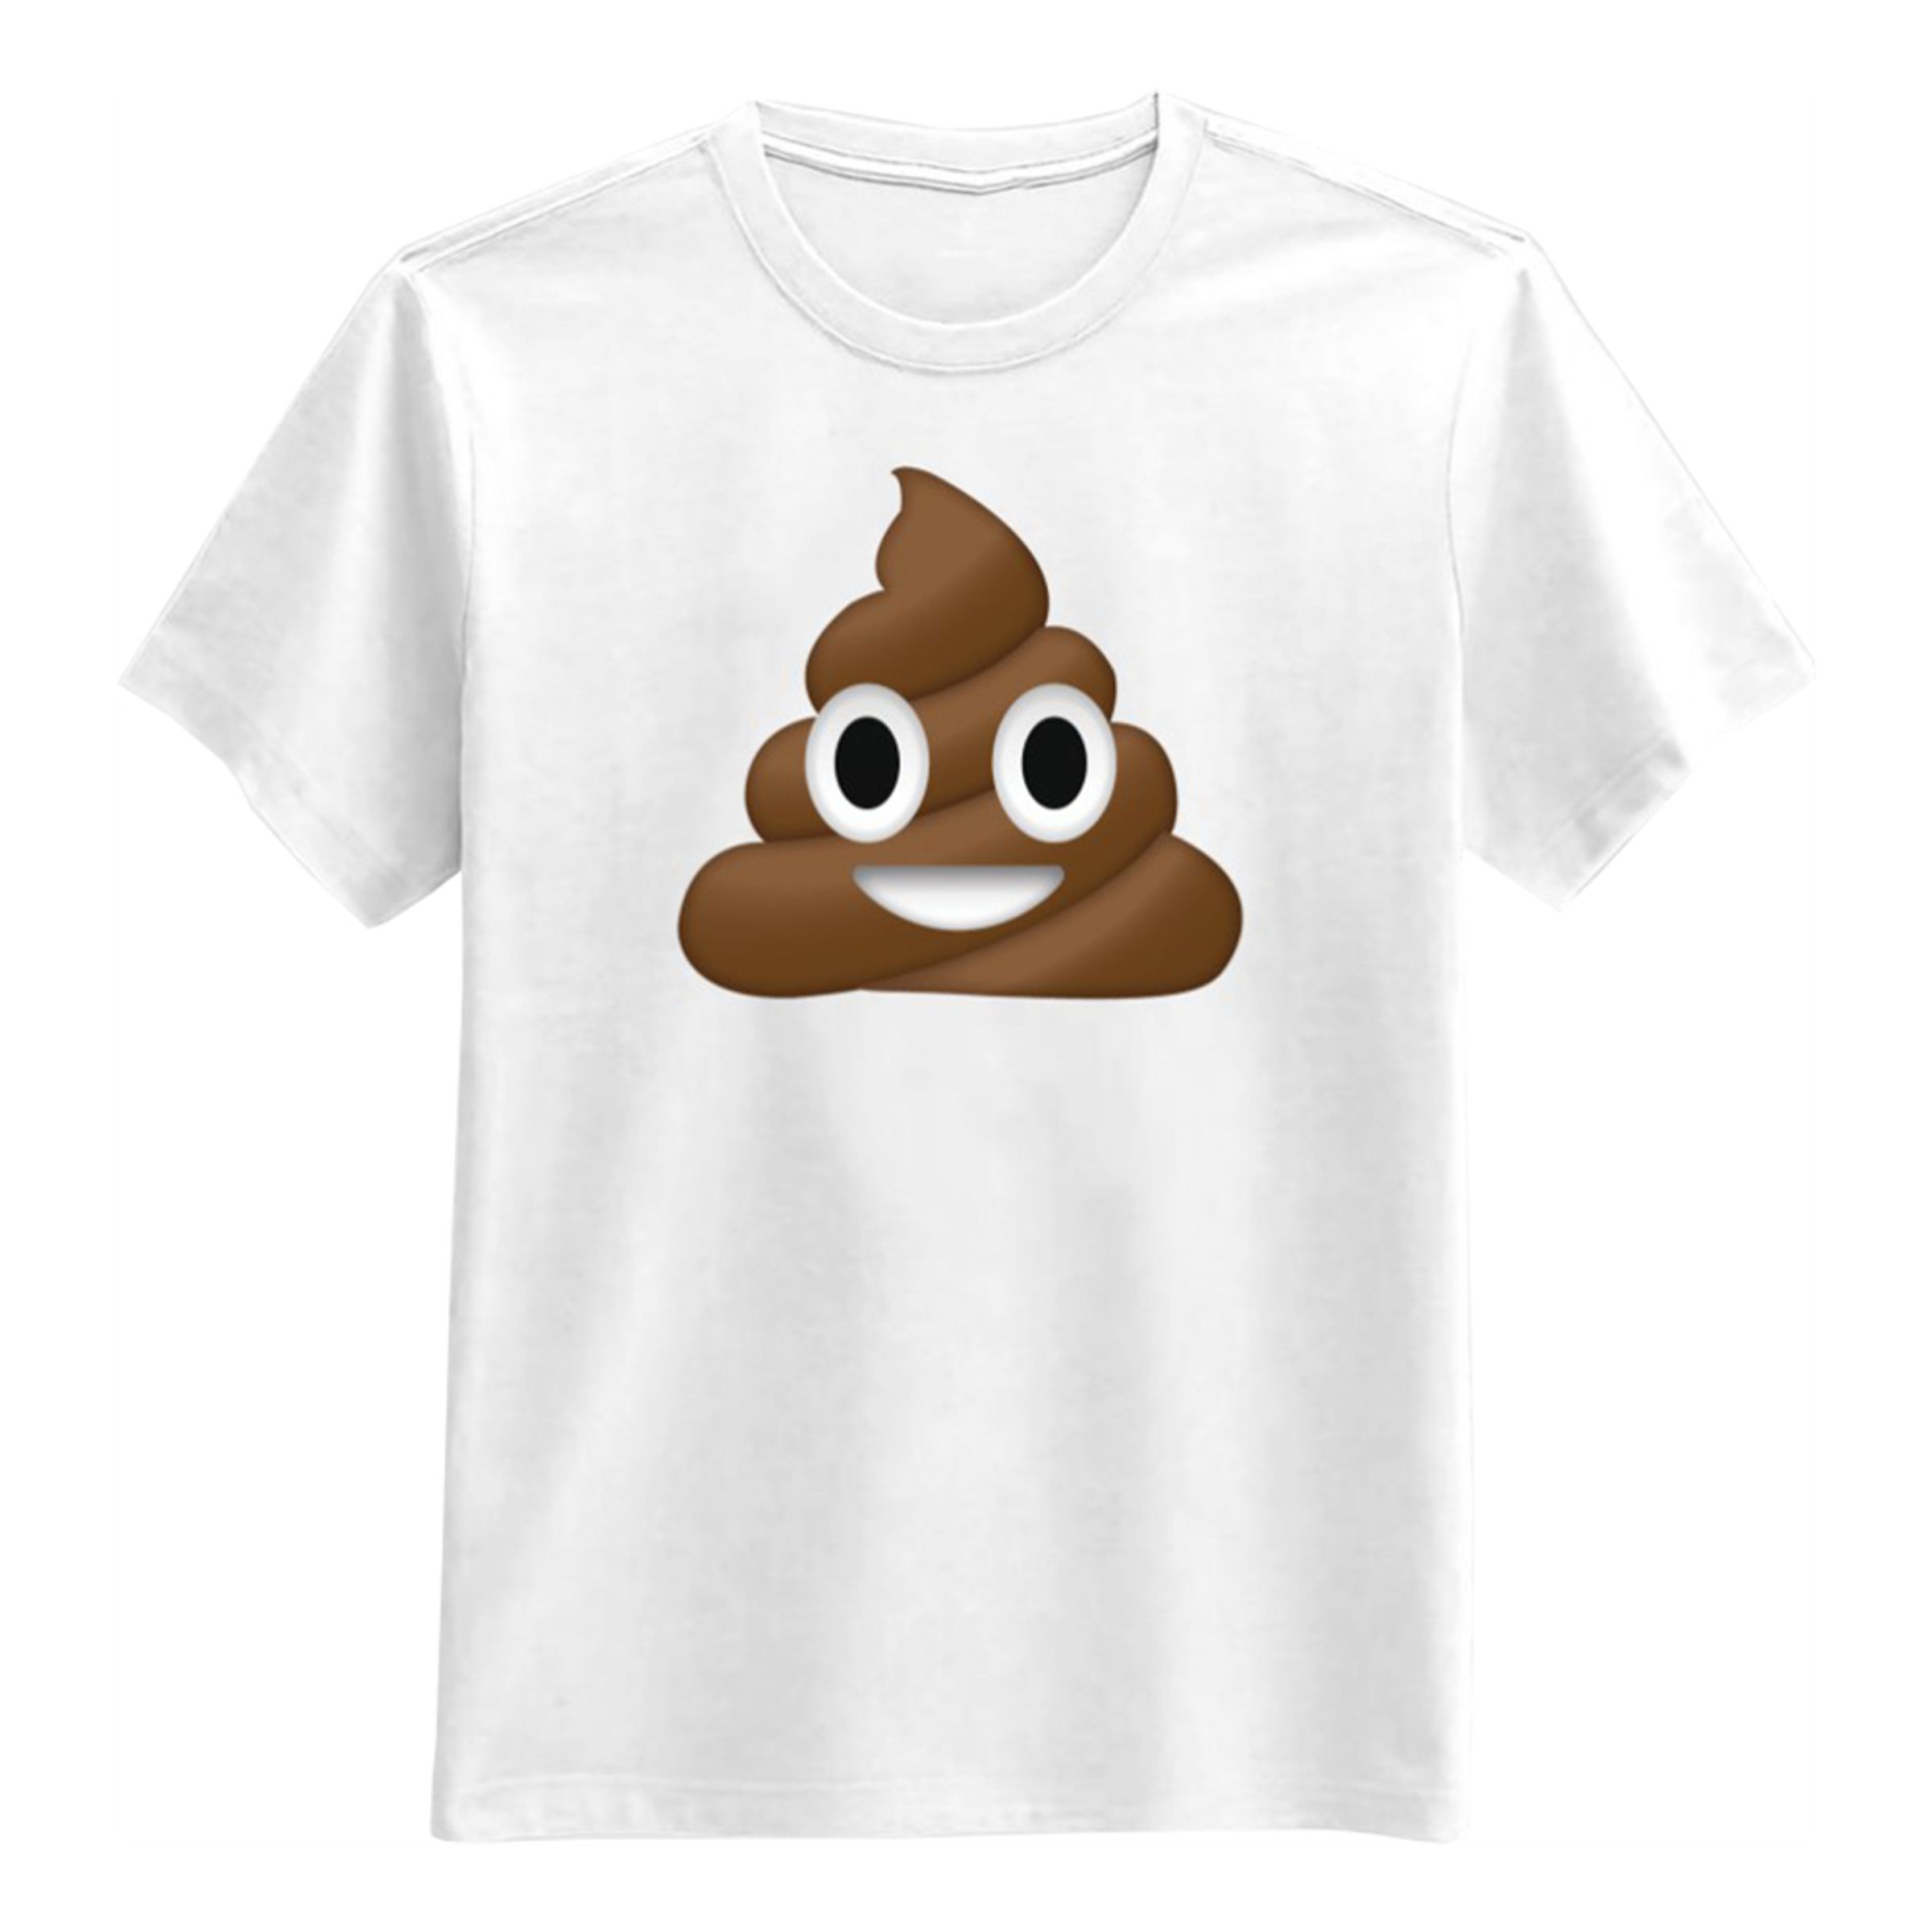 Pile of Poo T-shirt - X-Large